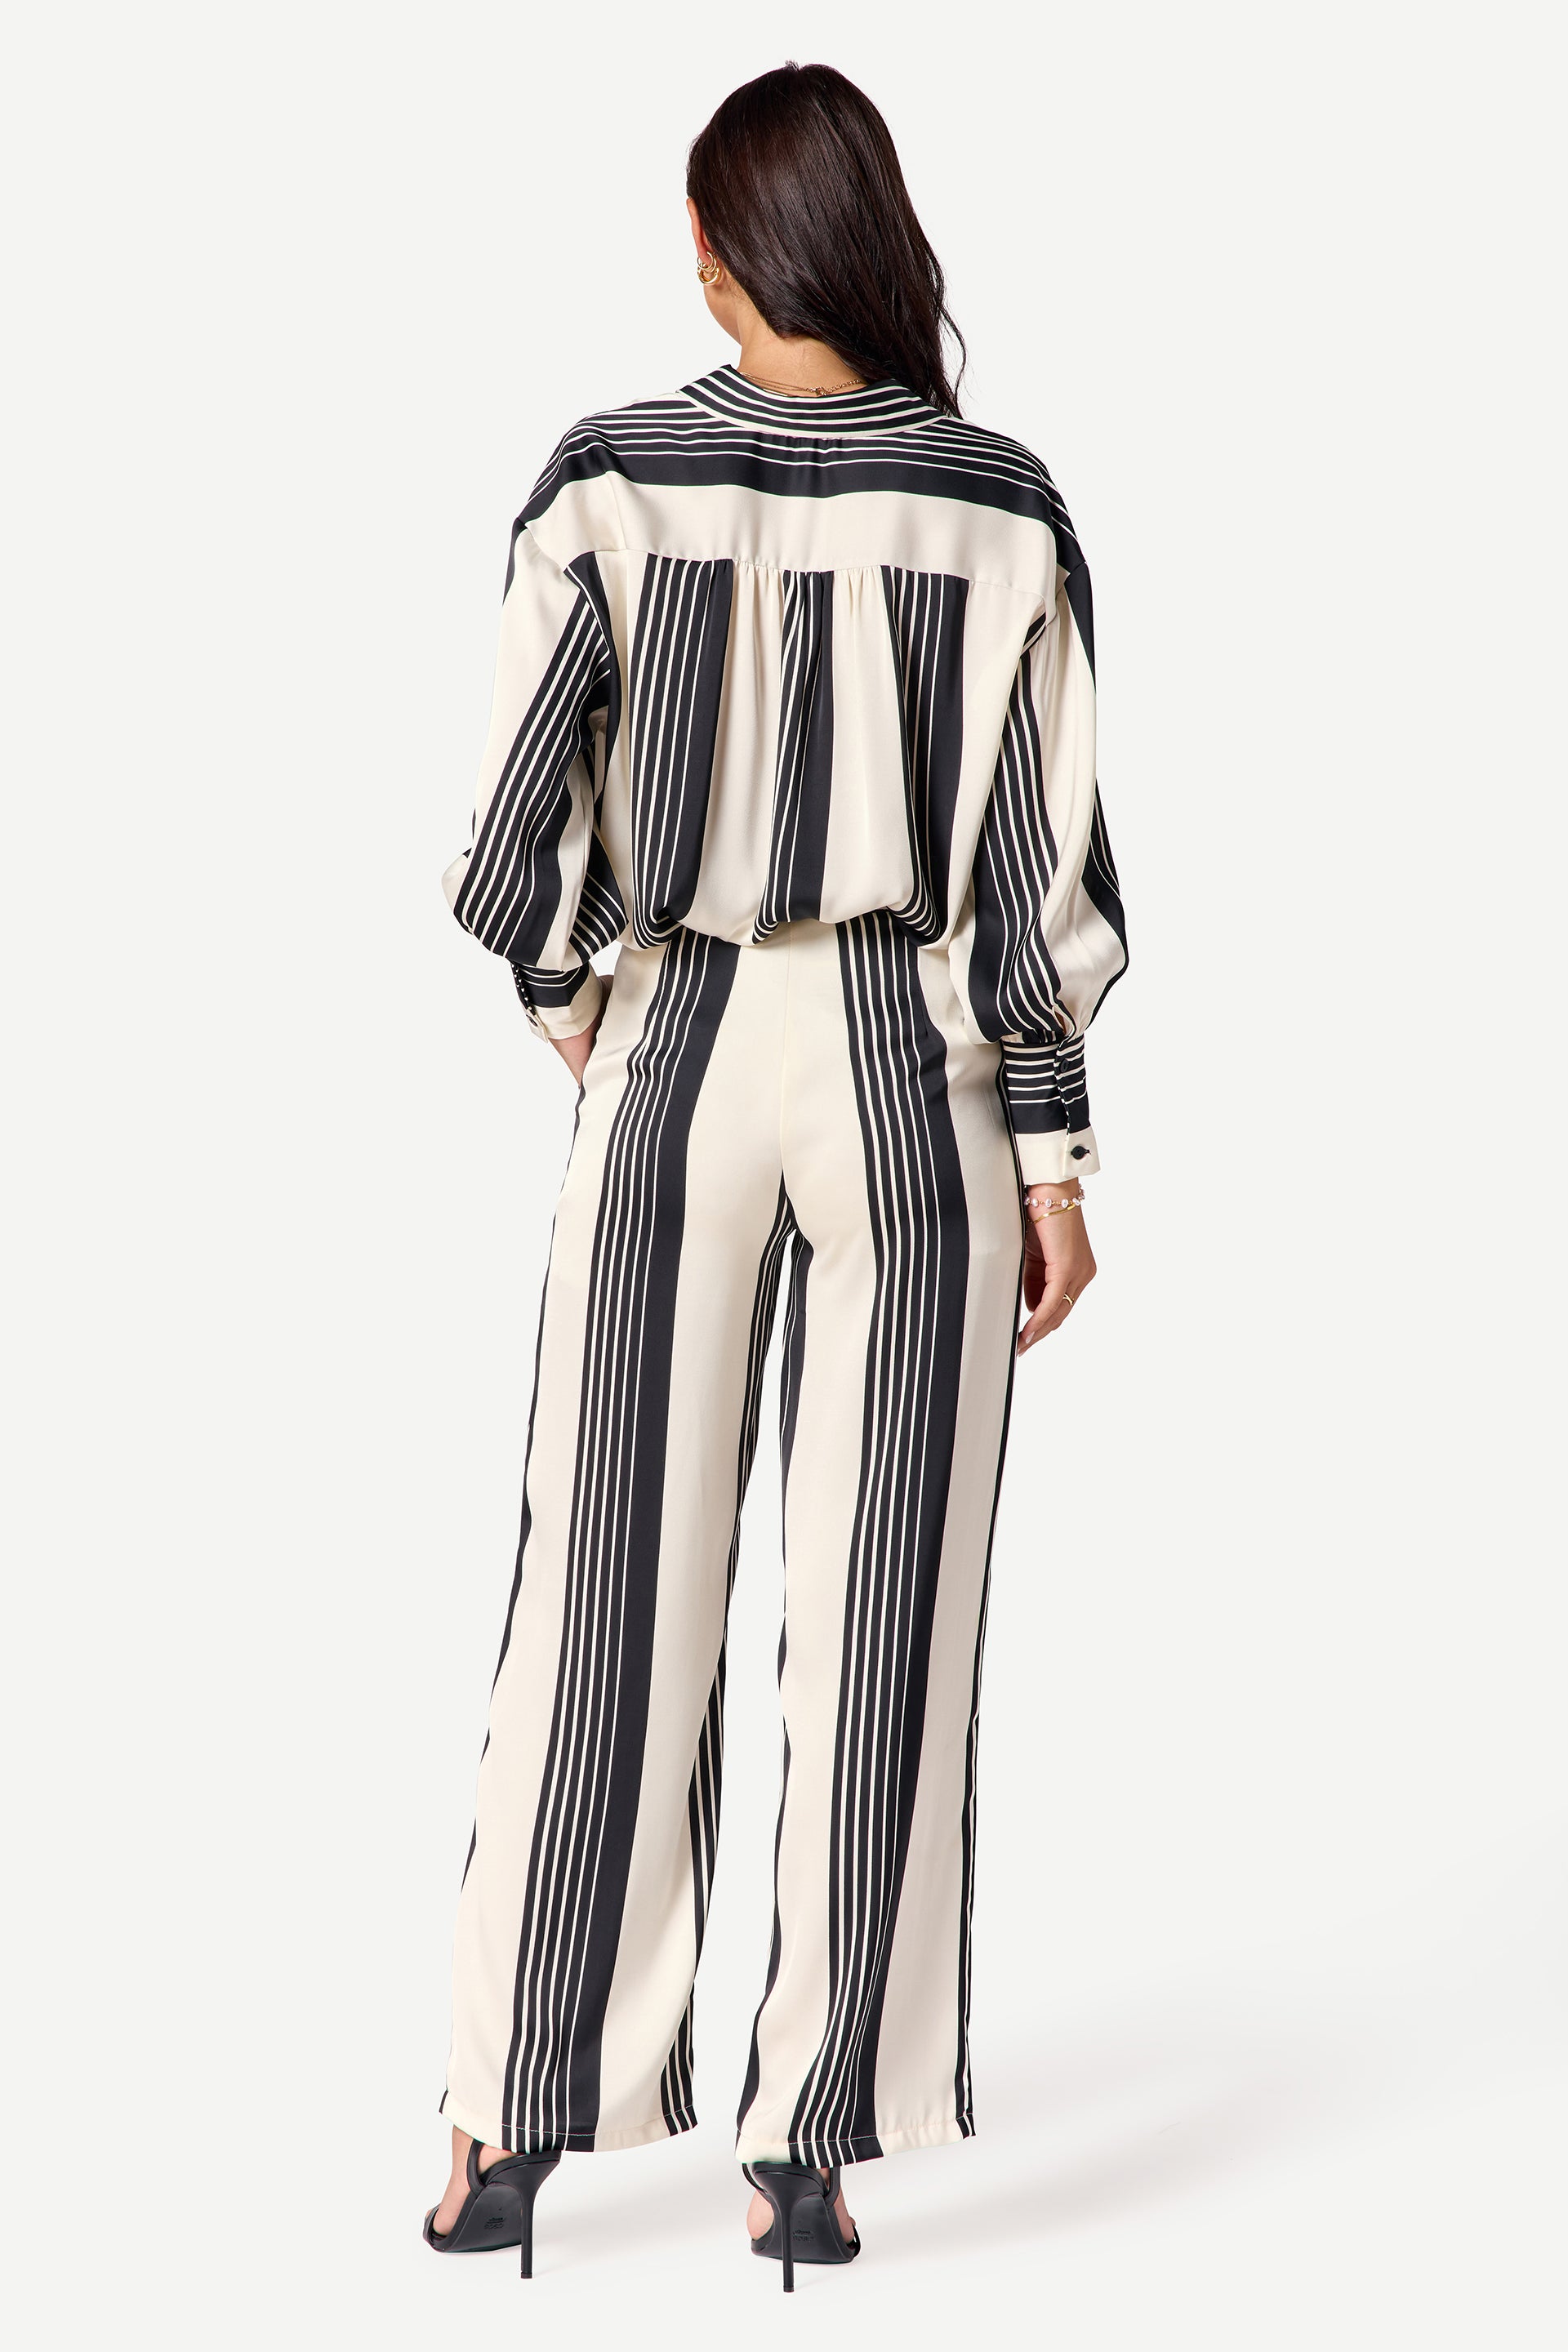 Striped high-waisted pants